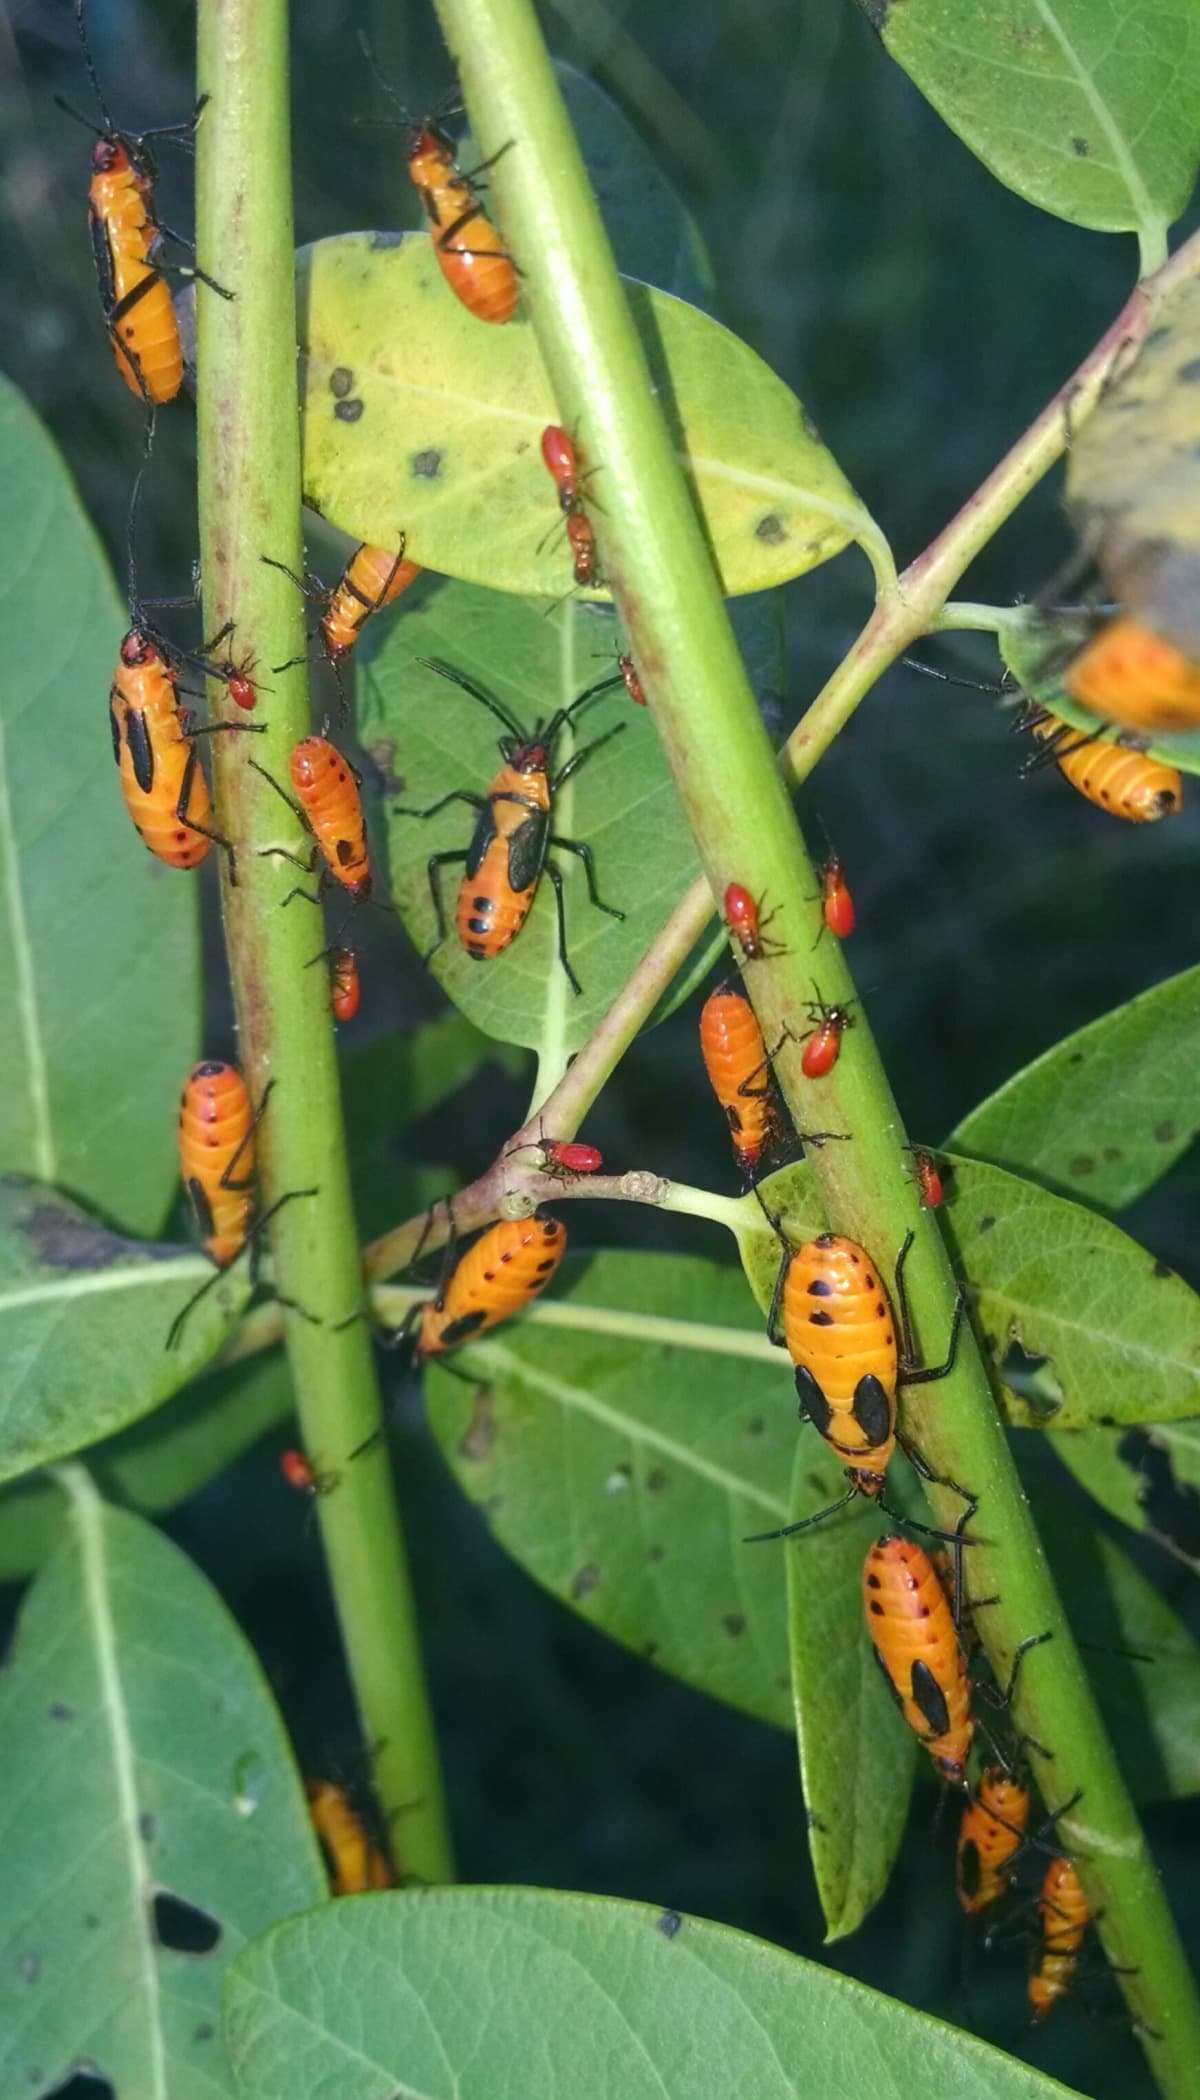 Baby Box Elder bugs on green plants.